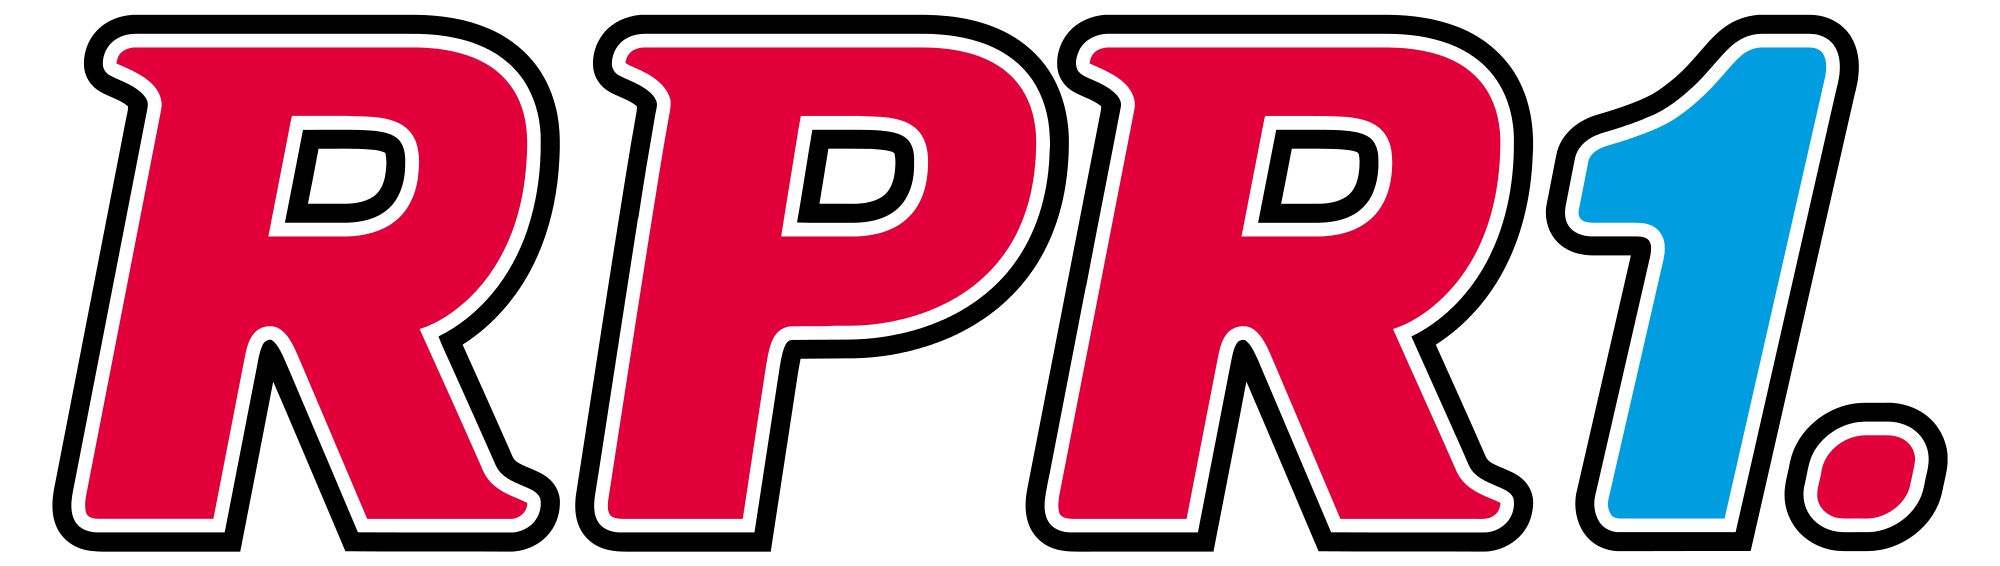 RPR1 Logo